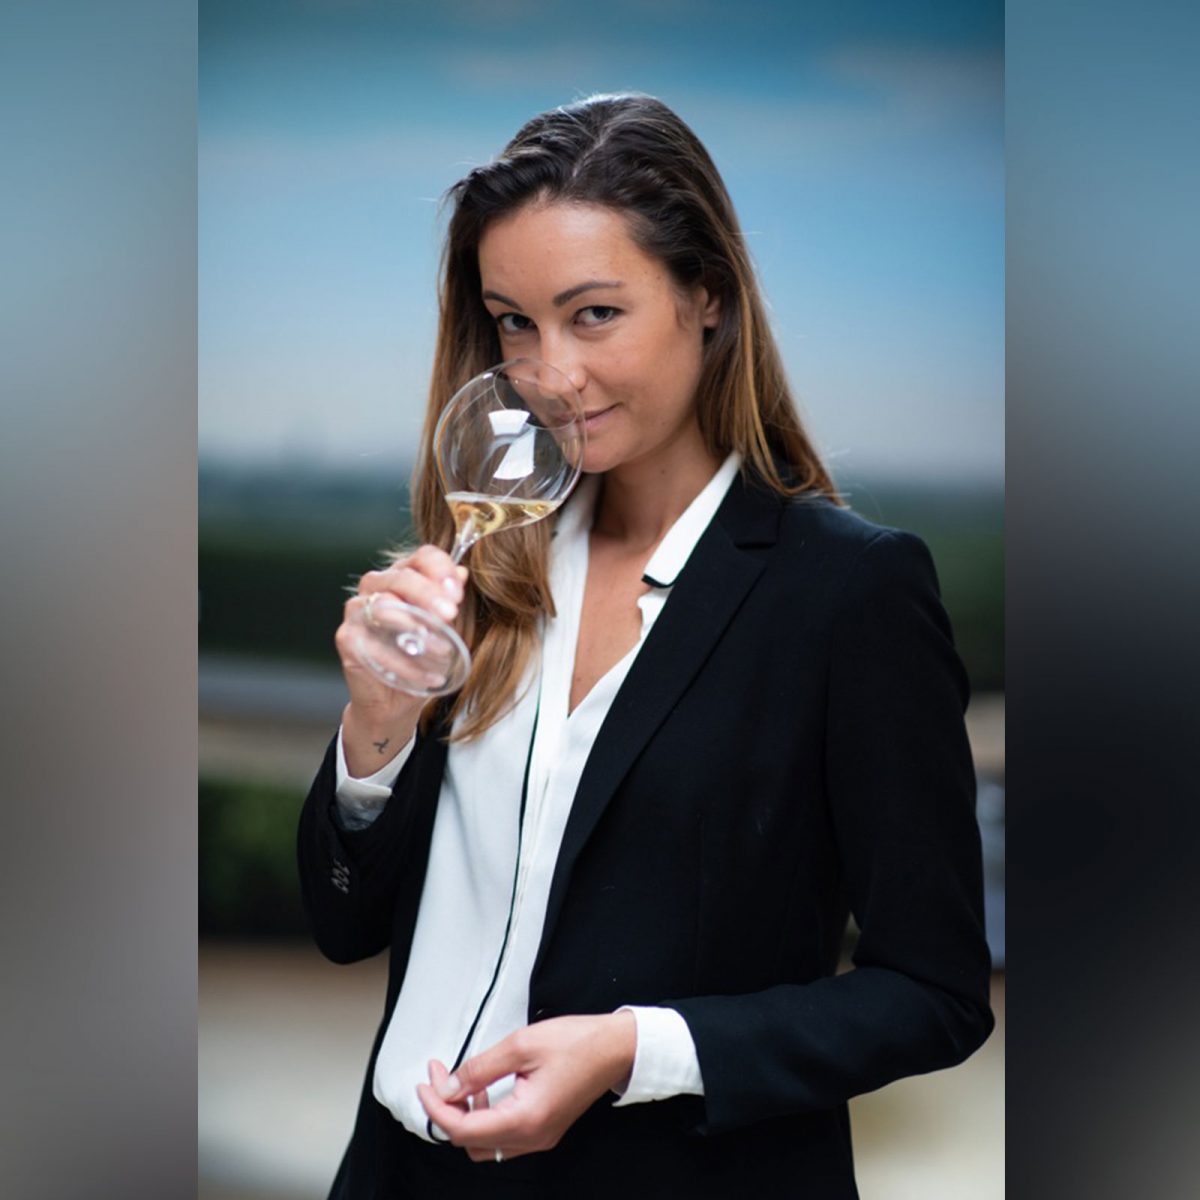 First taste of La Grande Dame 2015: is Veuve Clicquot's new fizz